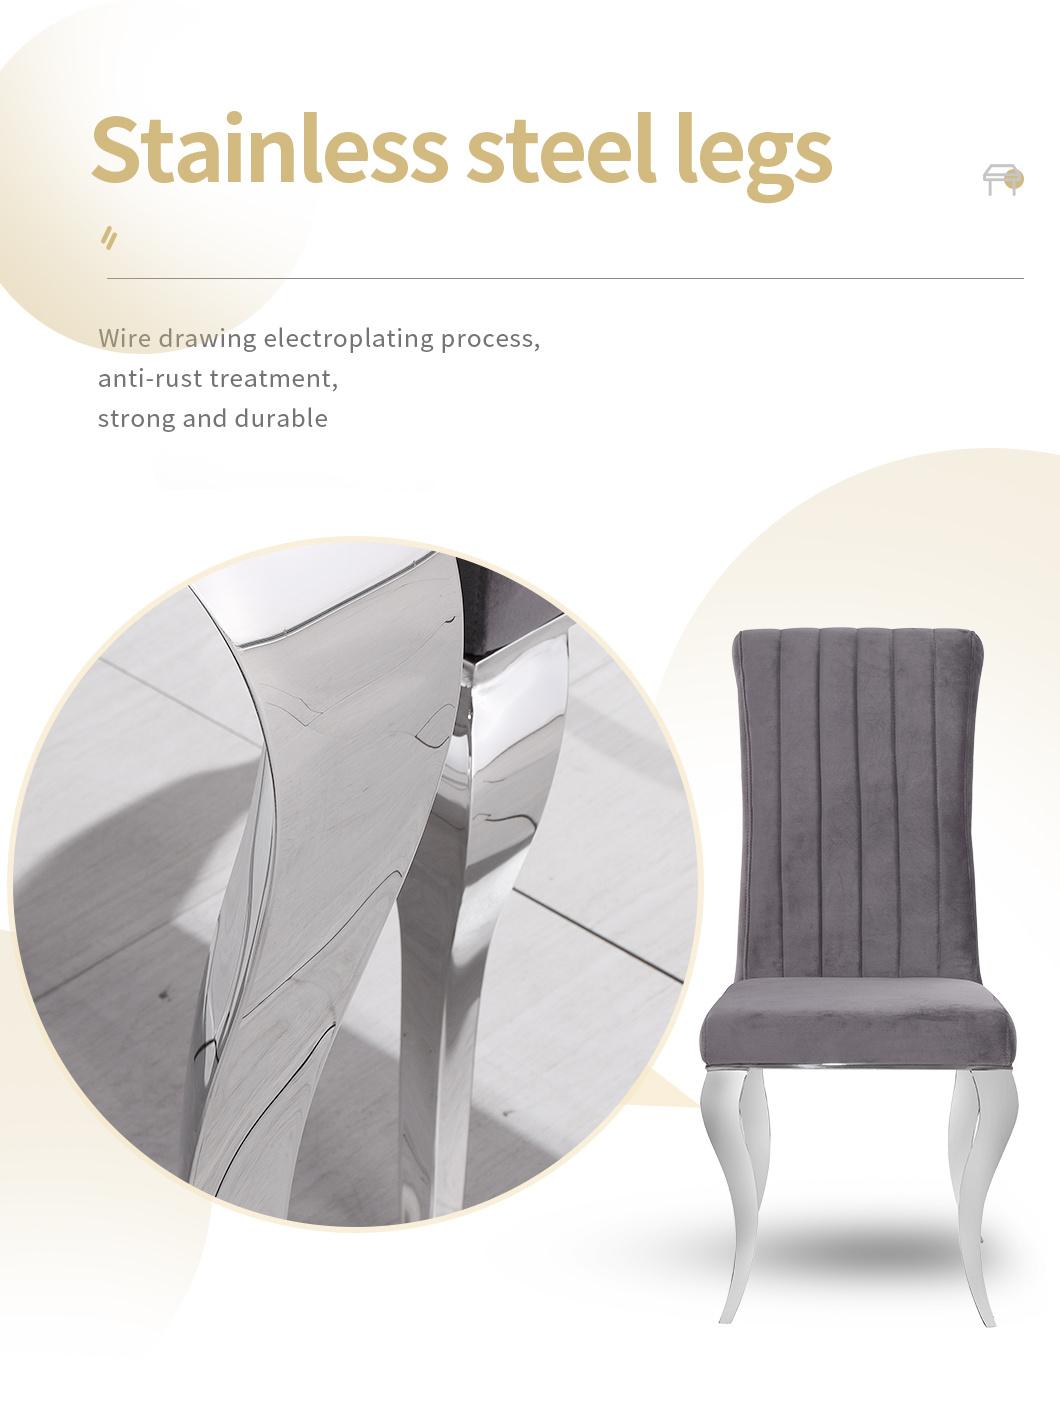 30 Days Without Armrest Diron Carton Box Acrylic Chair Restaurant Furniture